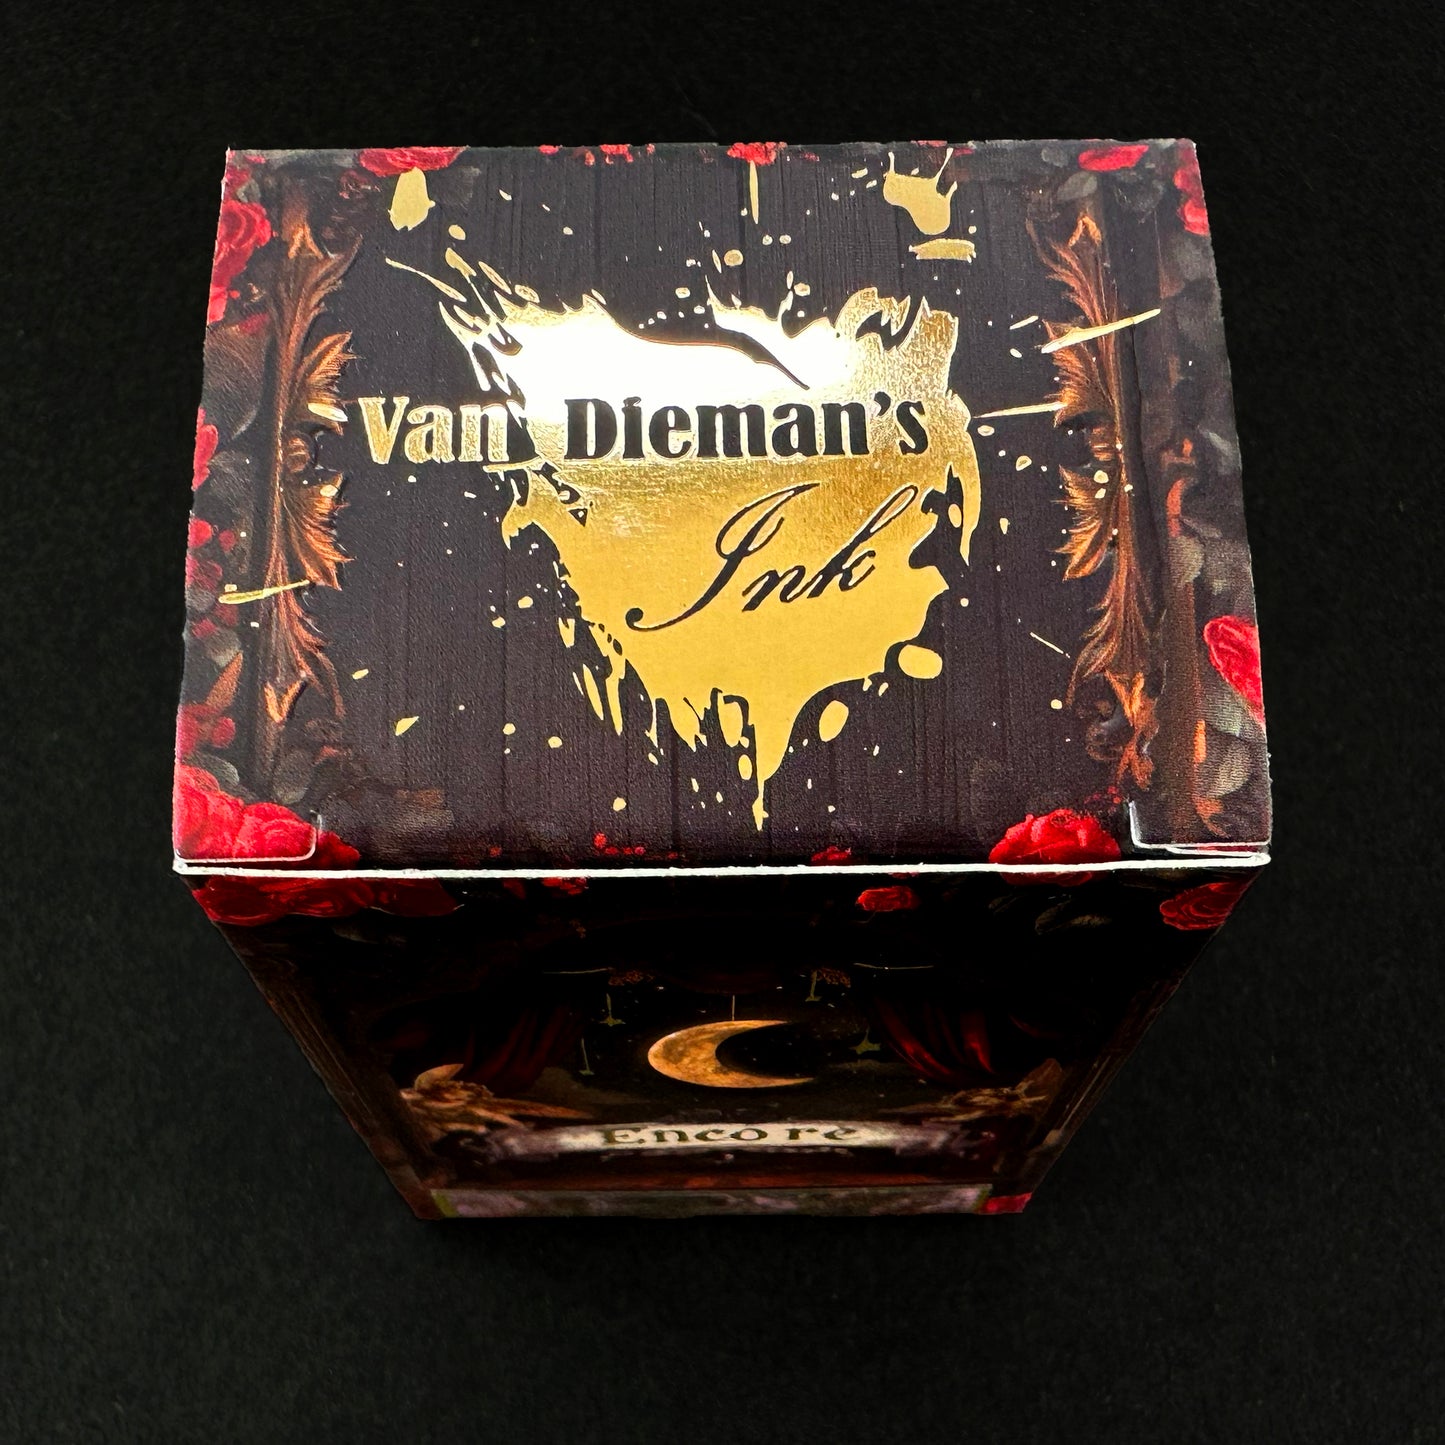 Van Dieman's Encore - Lost Love Letters 40ml Fountain Pen Ink